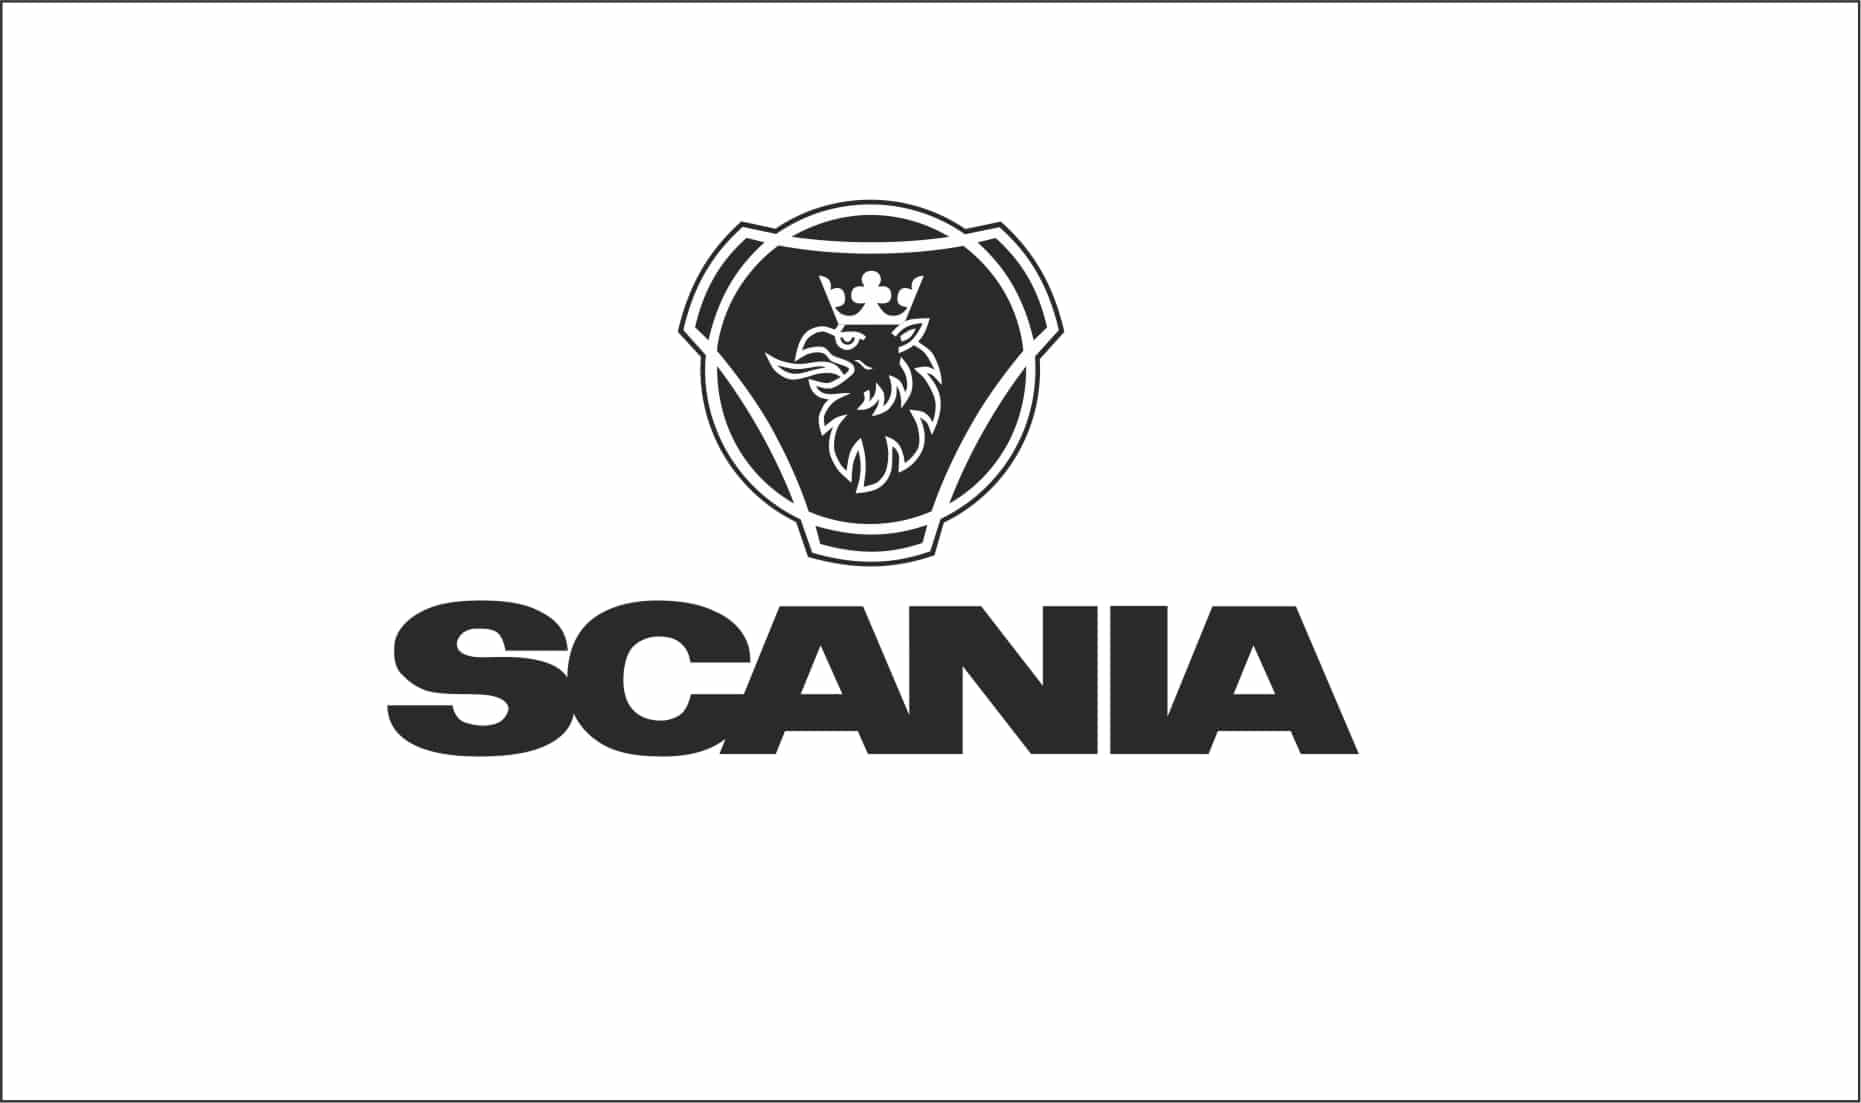 Scania Logo - Scania Logo graphic sticker made from quality vinyl - Vinyl Addition